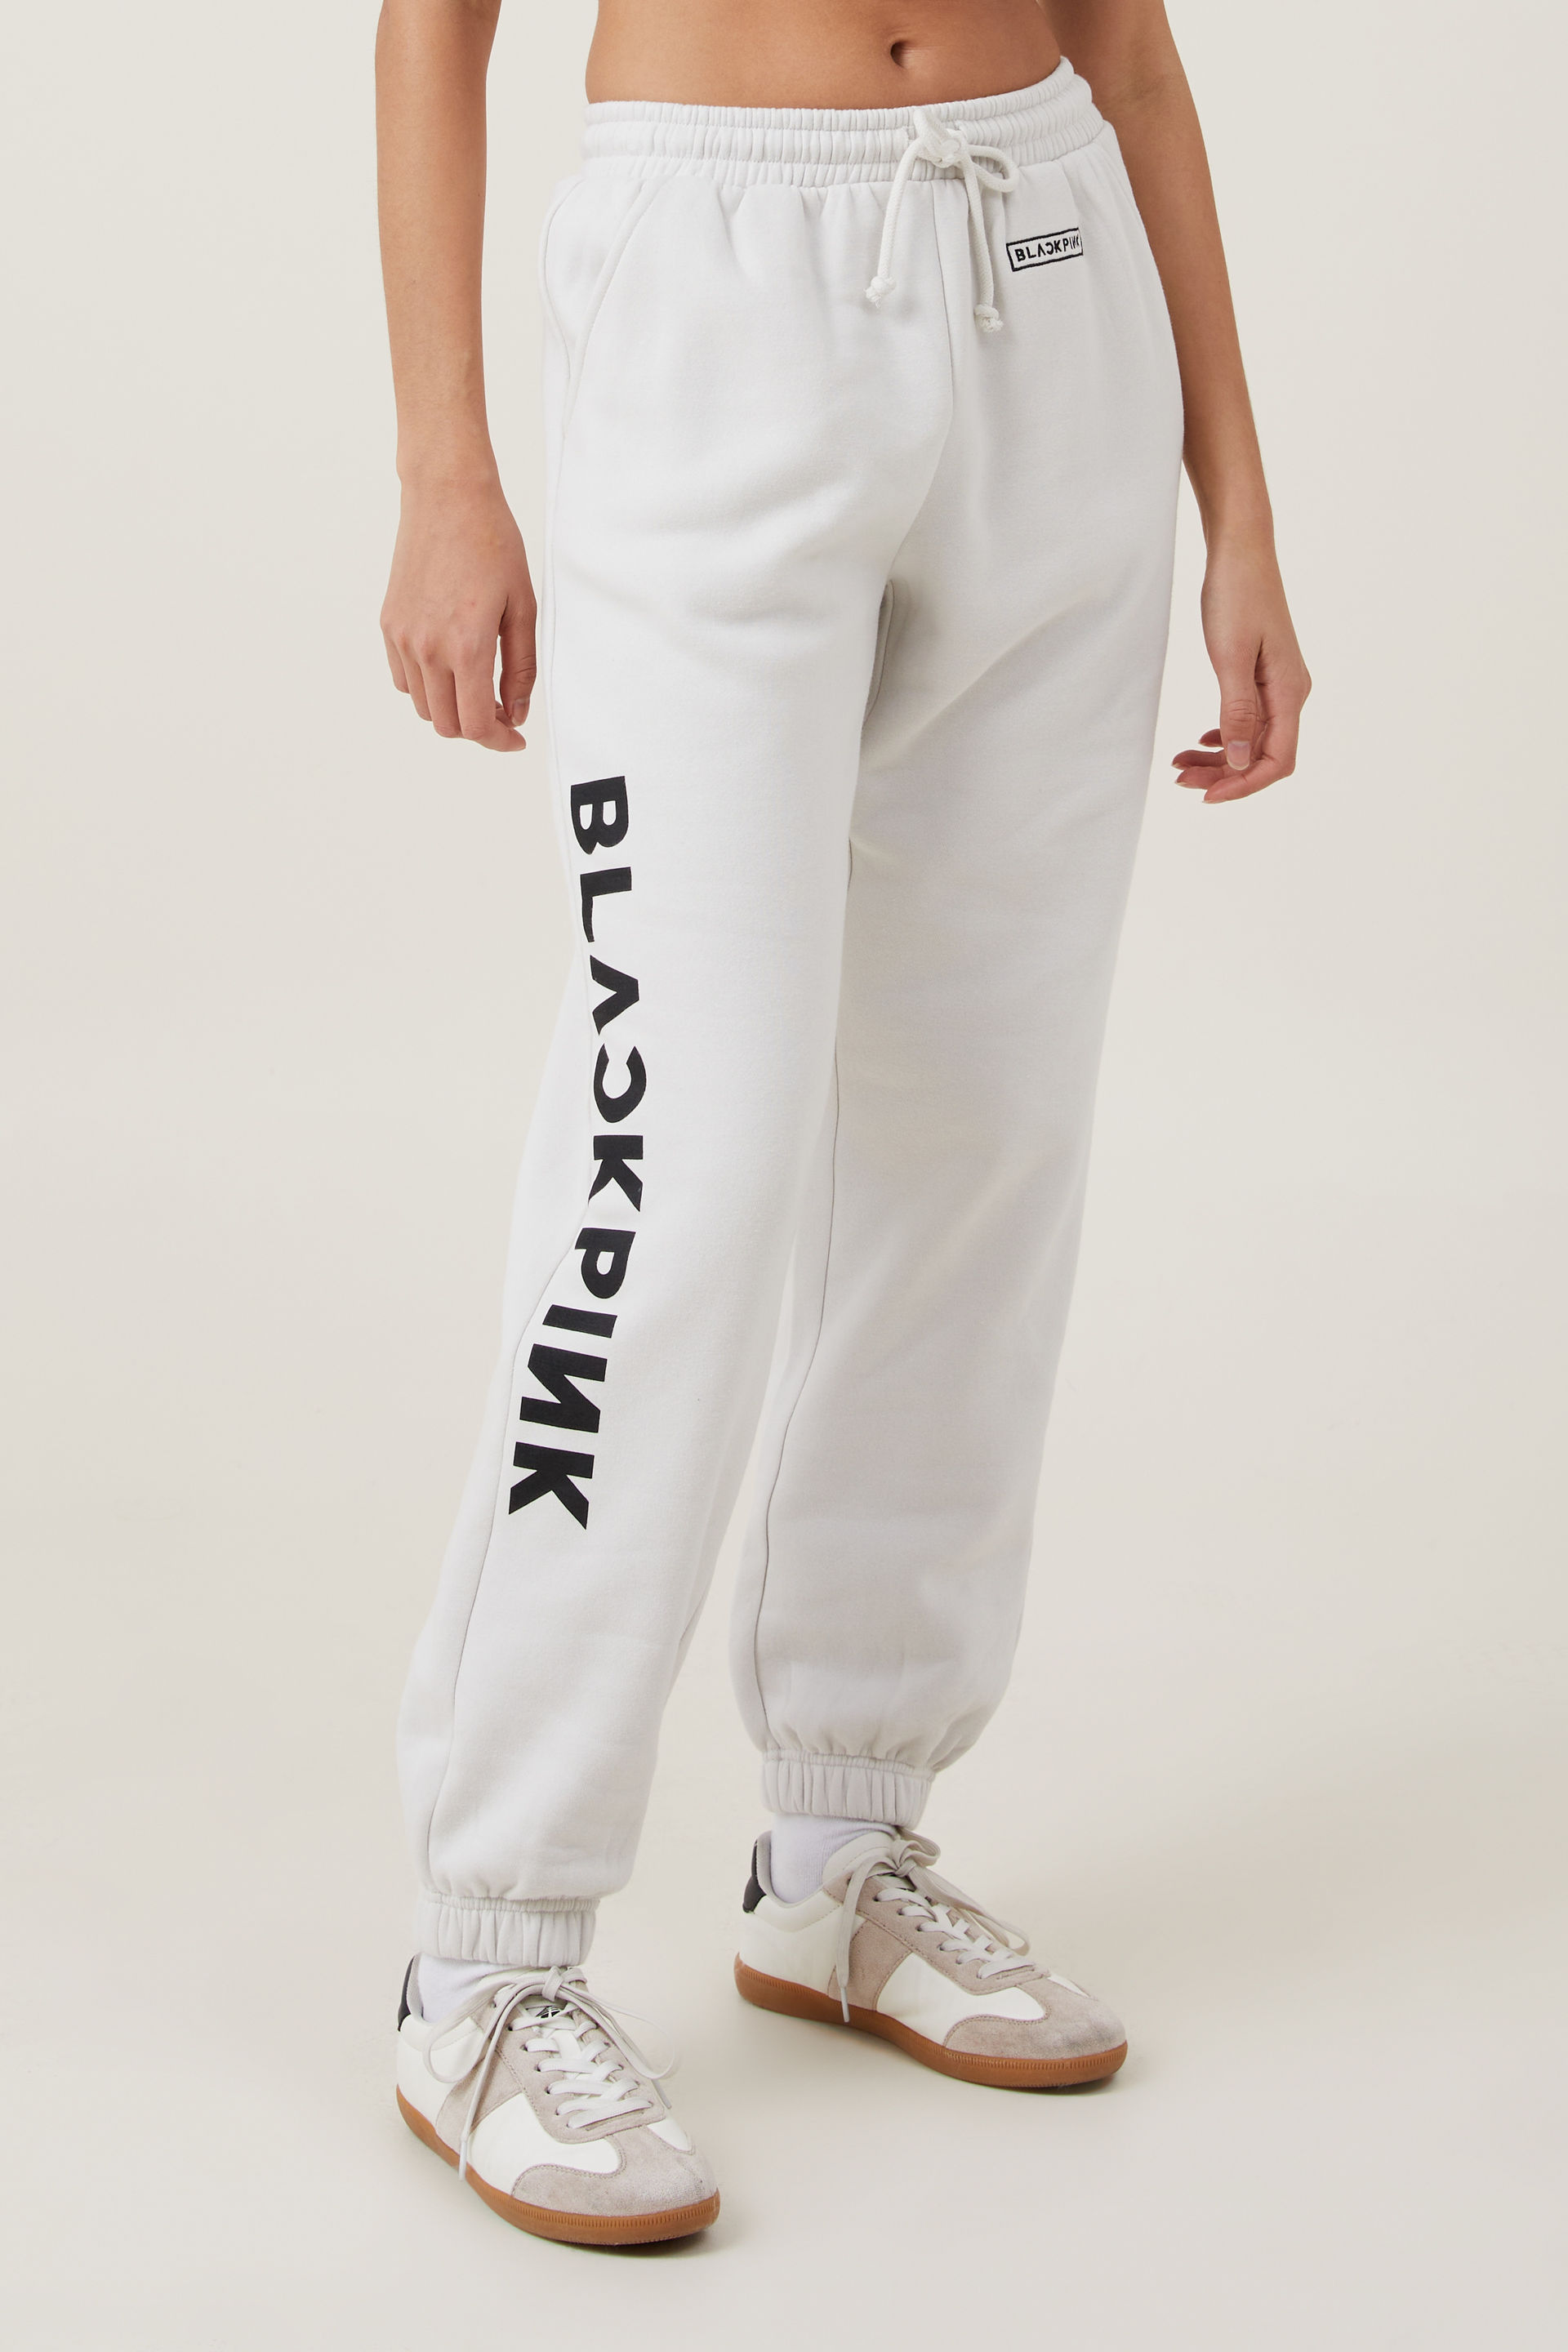 Blackpink Athletic Pink Puff Print Sweatpants – BLACKPINK